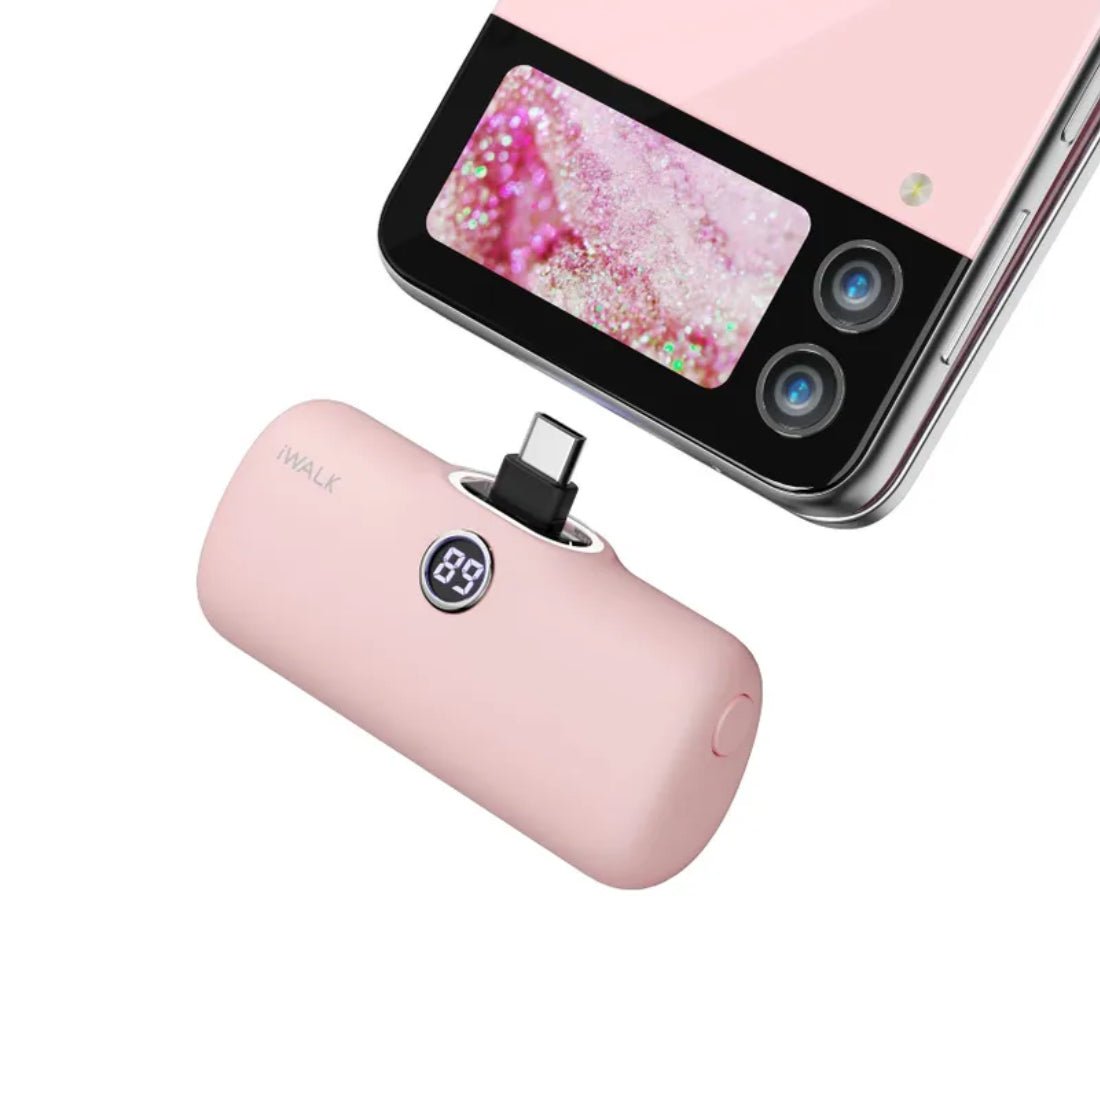 iWalk LinkPod Portable Charger 4800mAh Power Bank - Pink - مزود طاقة - Store 974 | ستور ٩٧٤